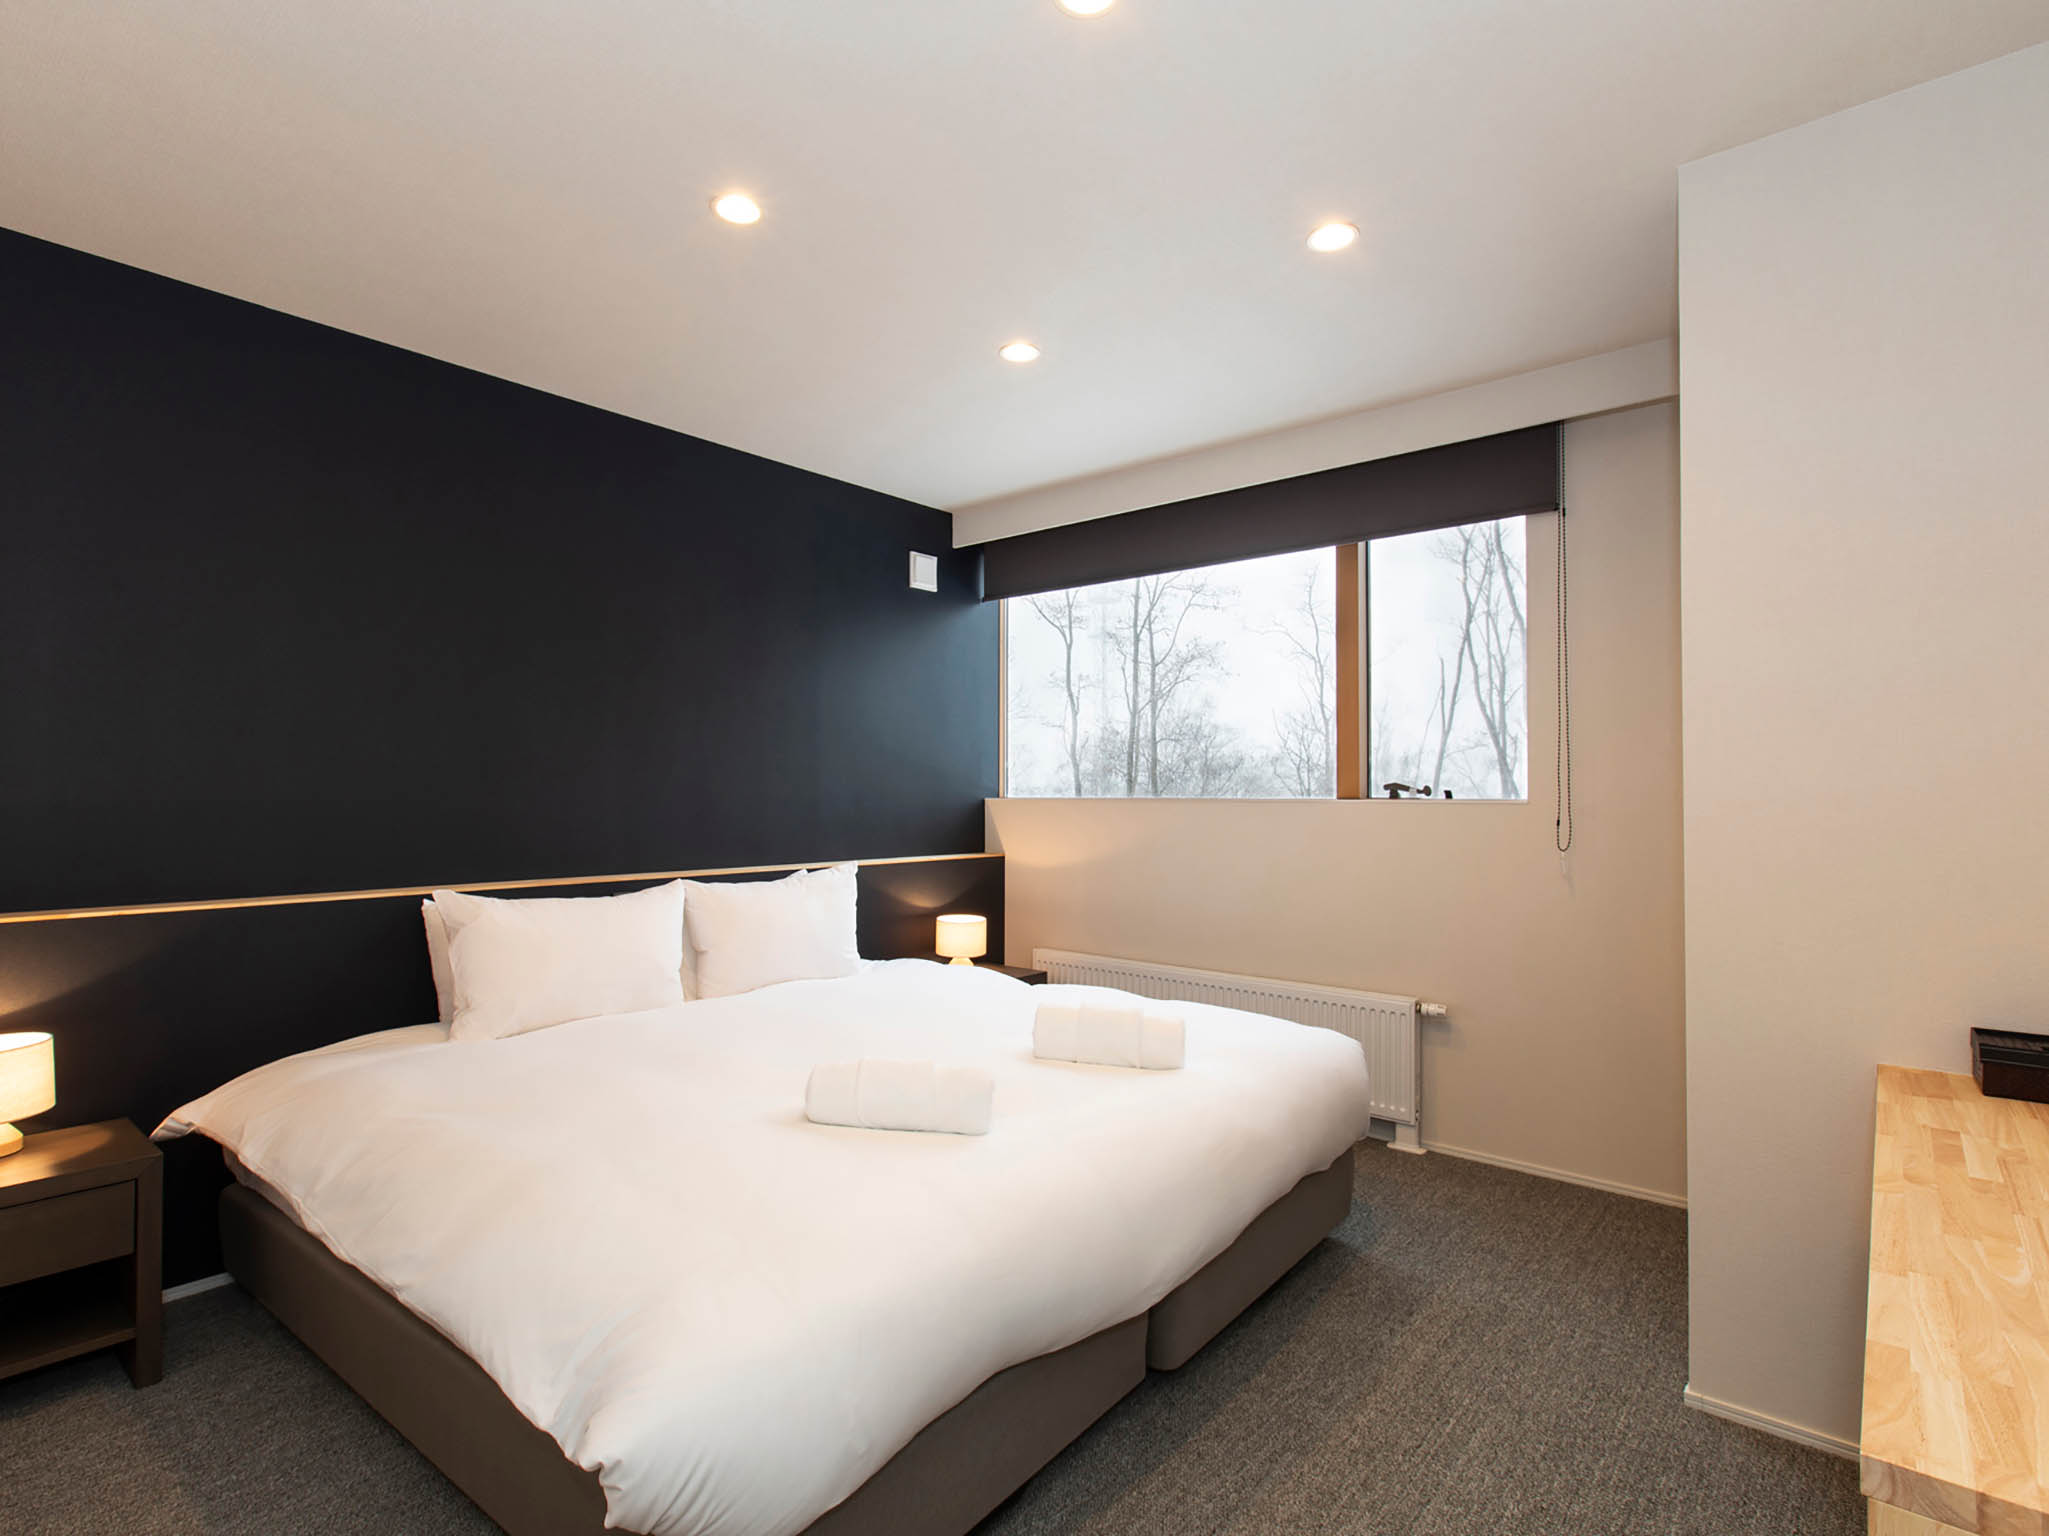 Aoyama Lodge - Guest bedroom design